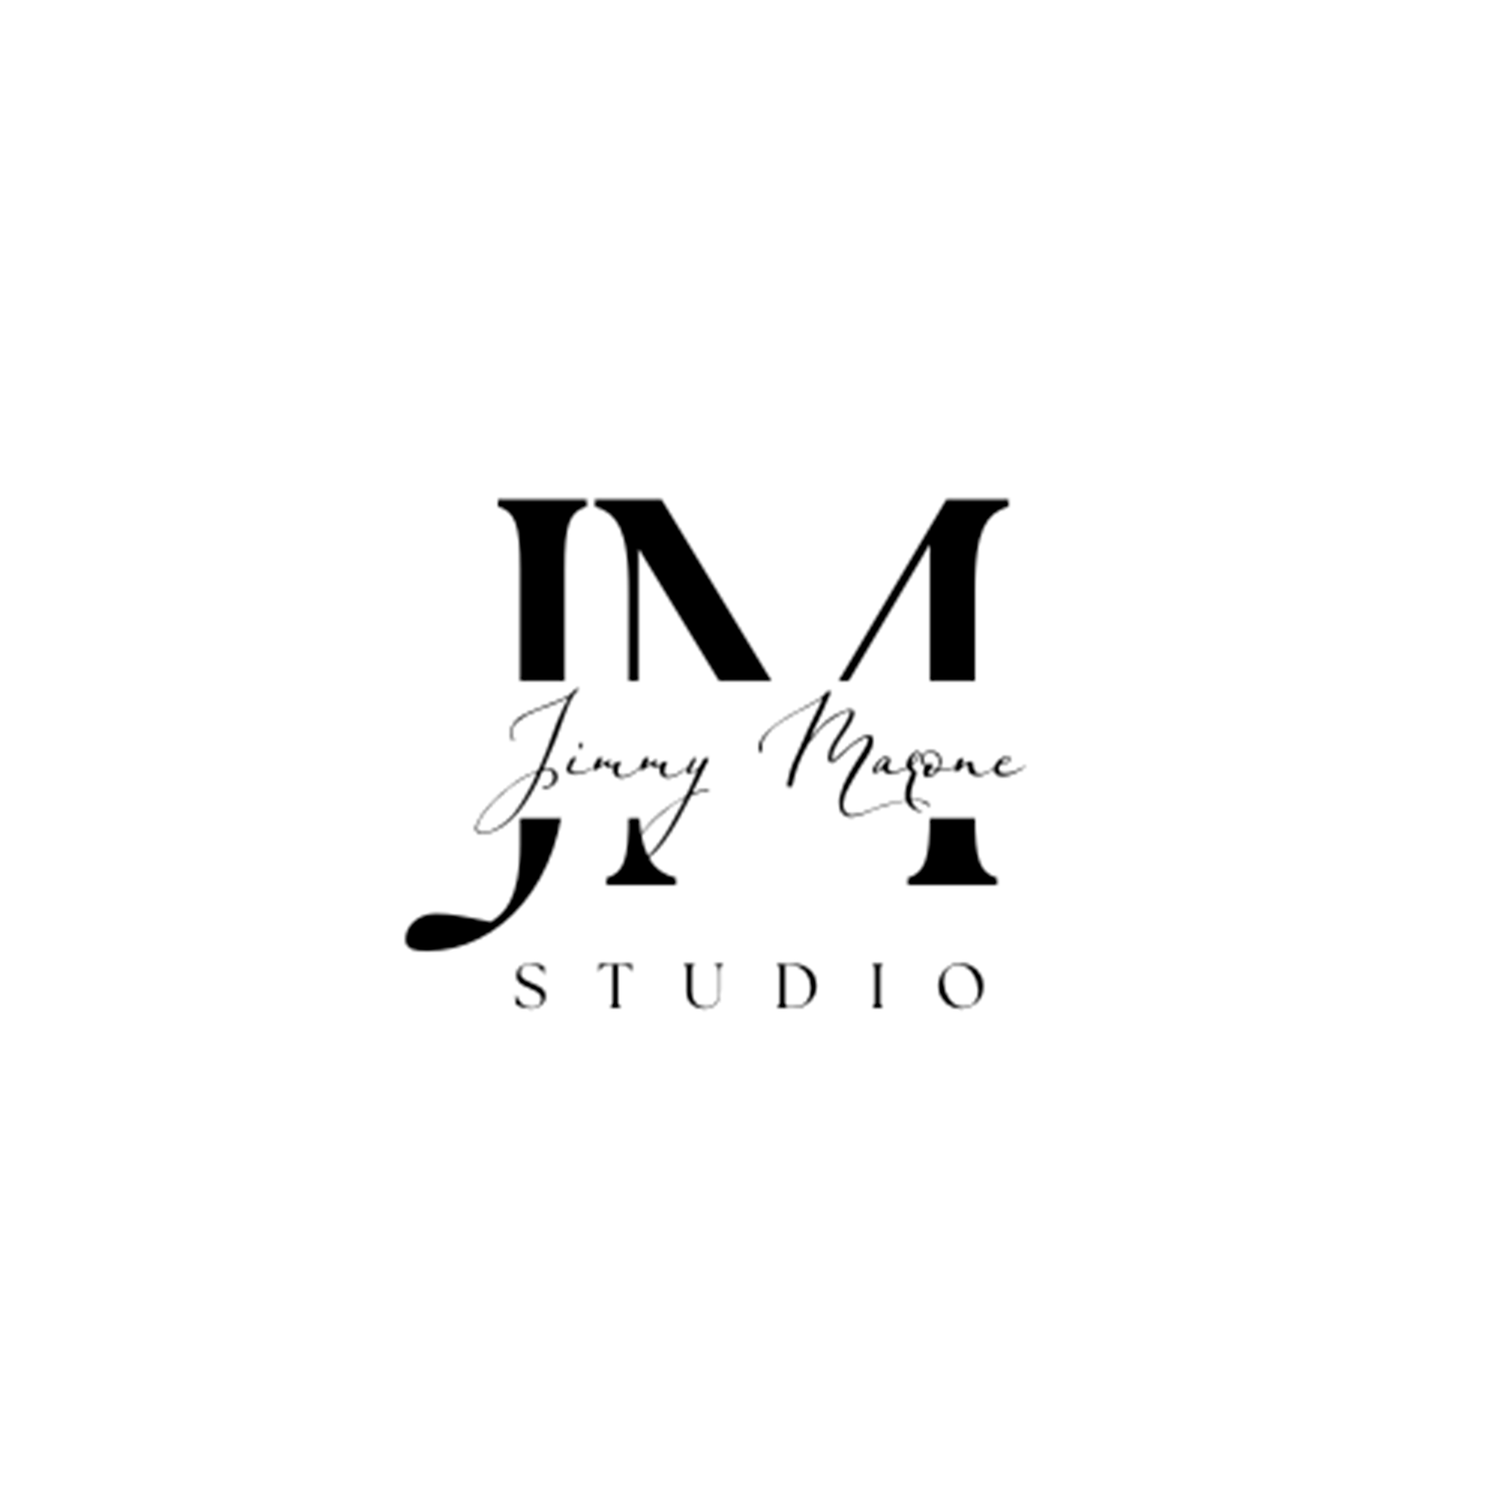 Jimmy Marone Studio